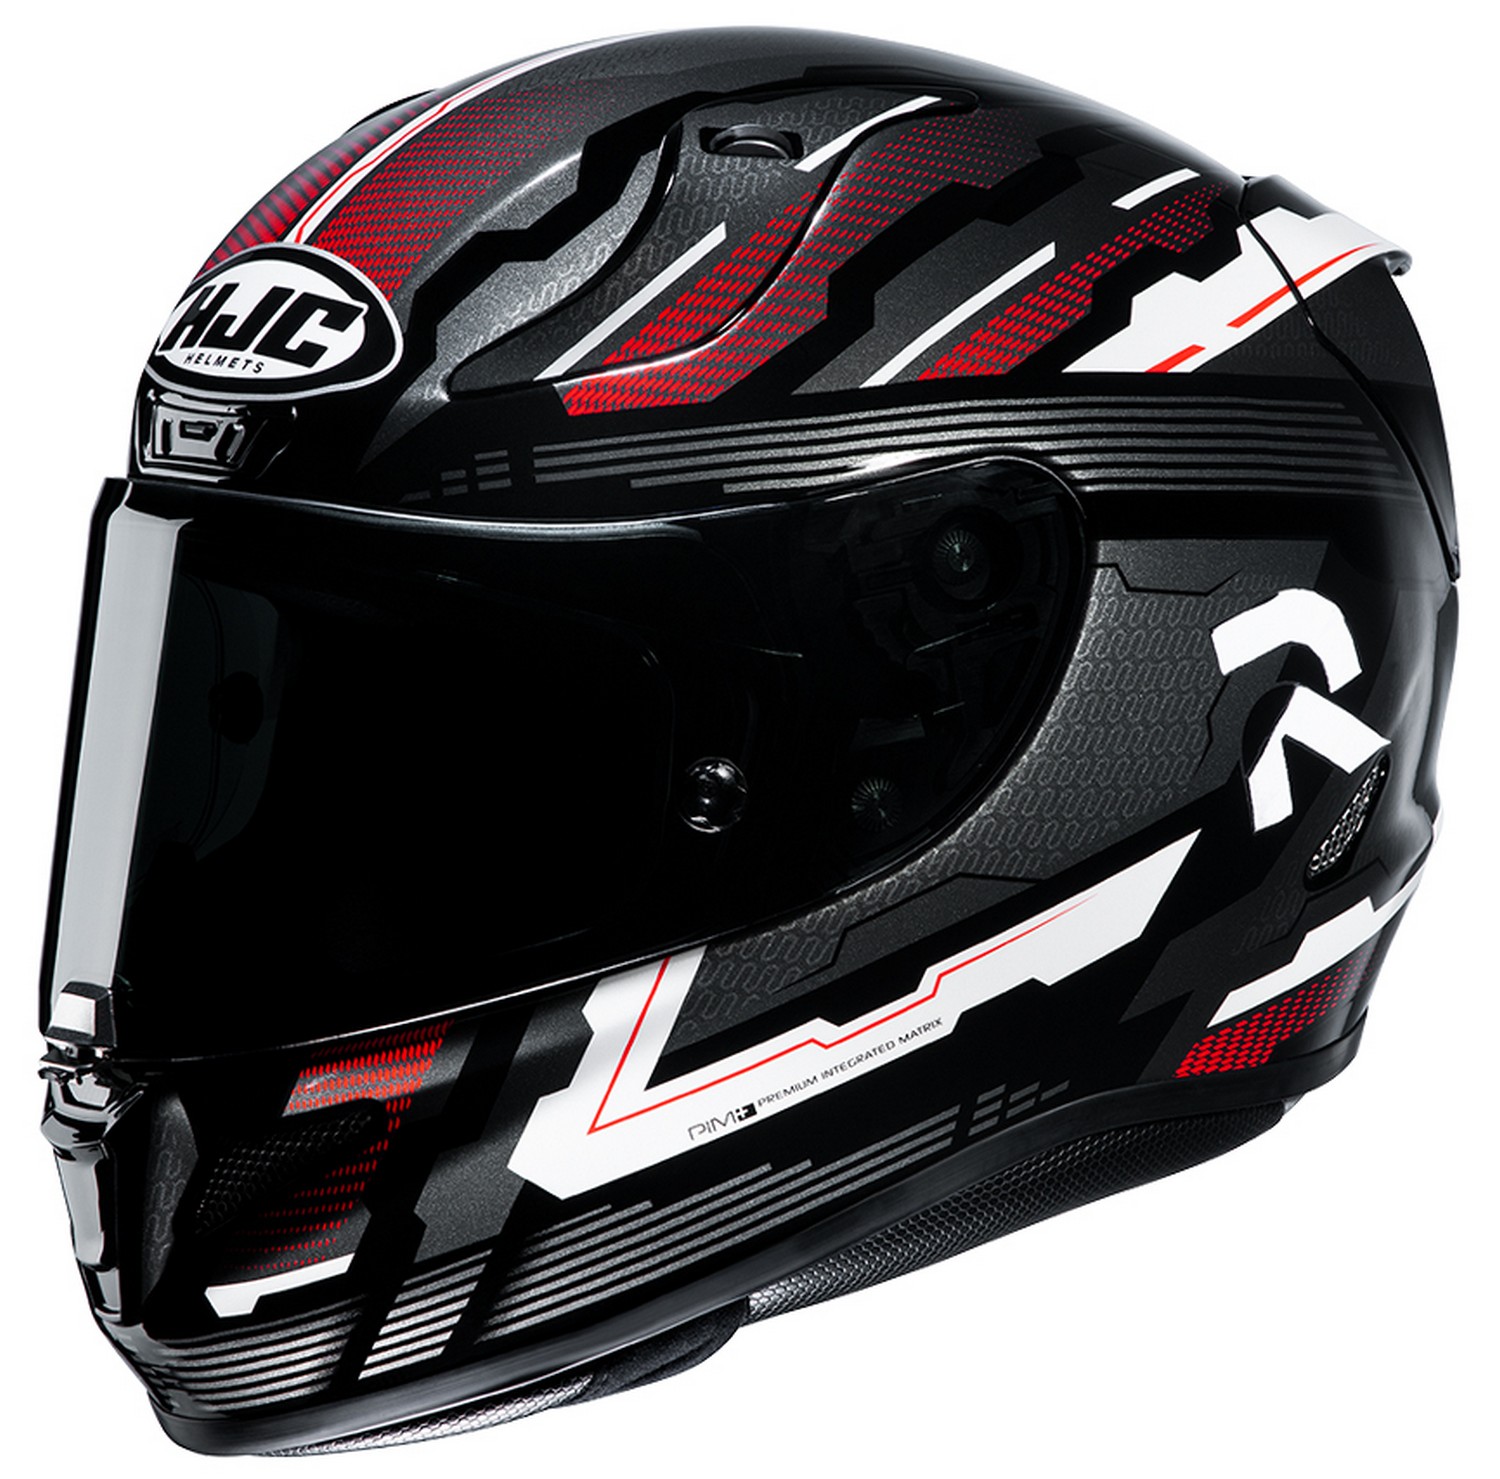 HJC RPHA 11 Pro Stobon Motorcycle Helmet Red/Black XXL - image 1 of 2